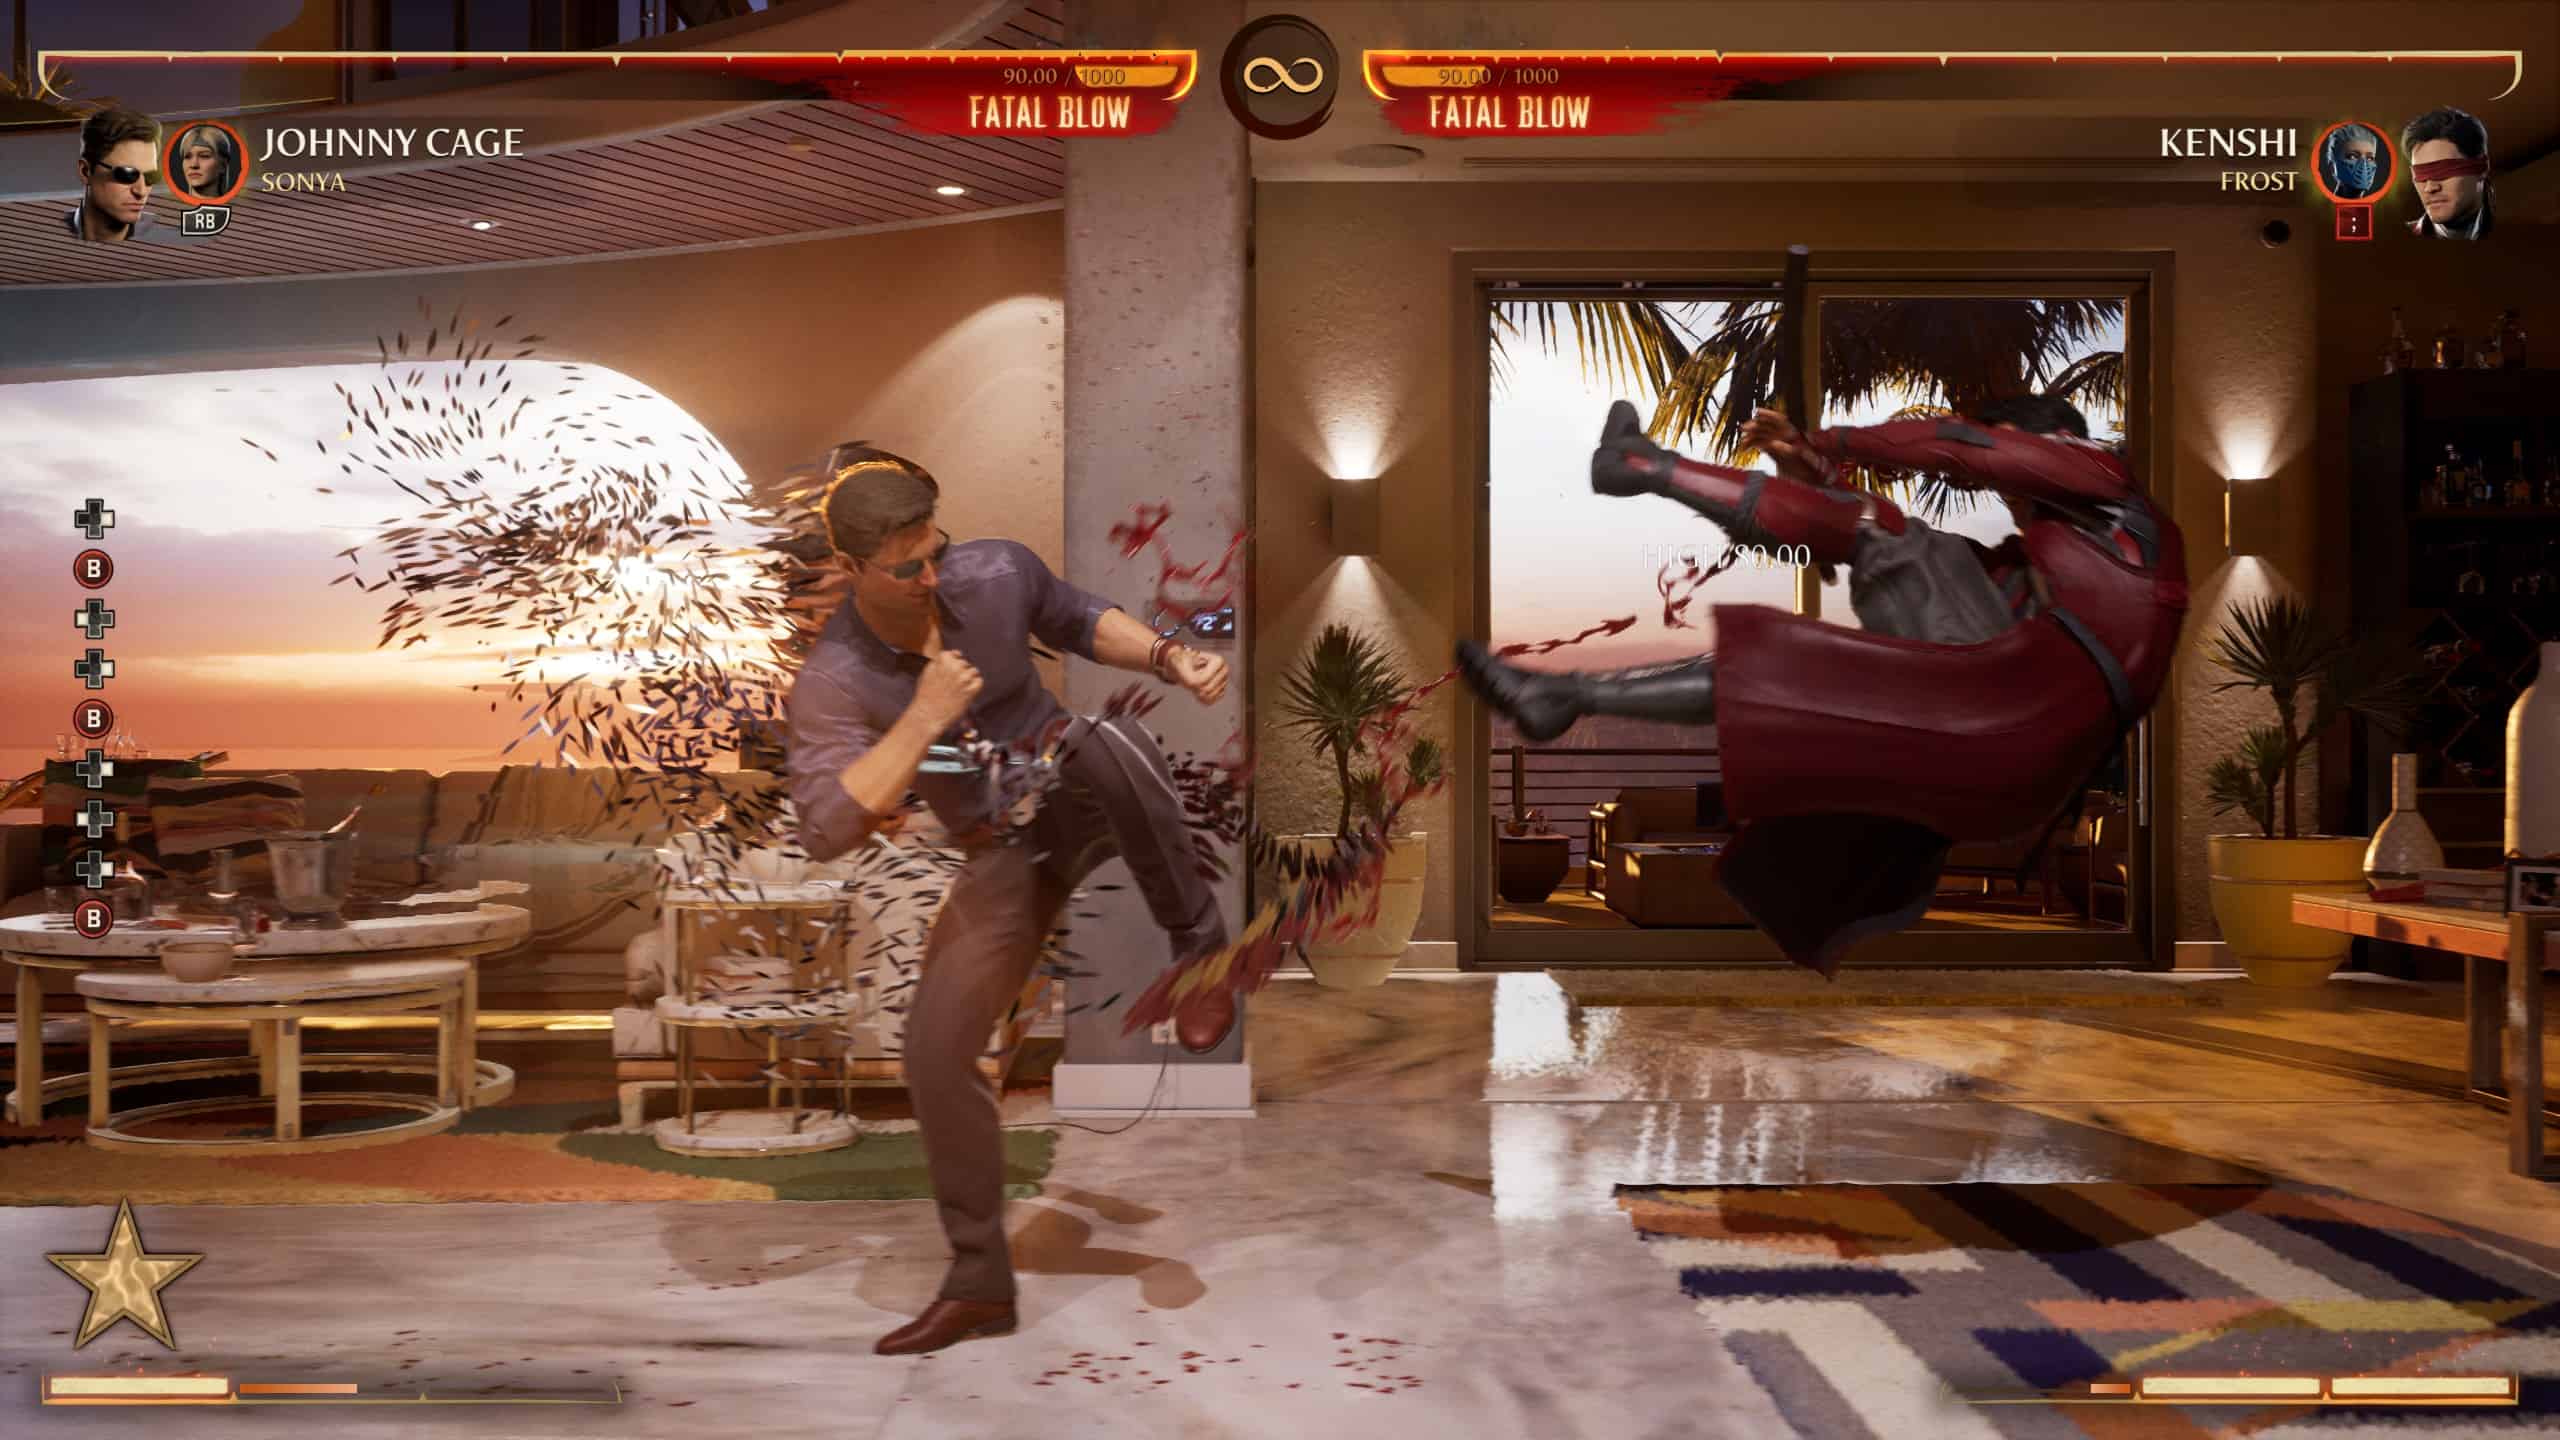 Mortal Kombat 1 Johnny Cage: An image of Johnny Cage kicking Kenshi in his mansion.